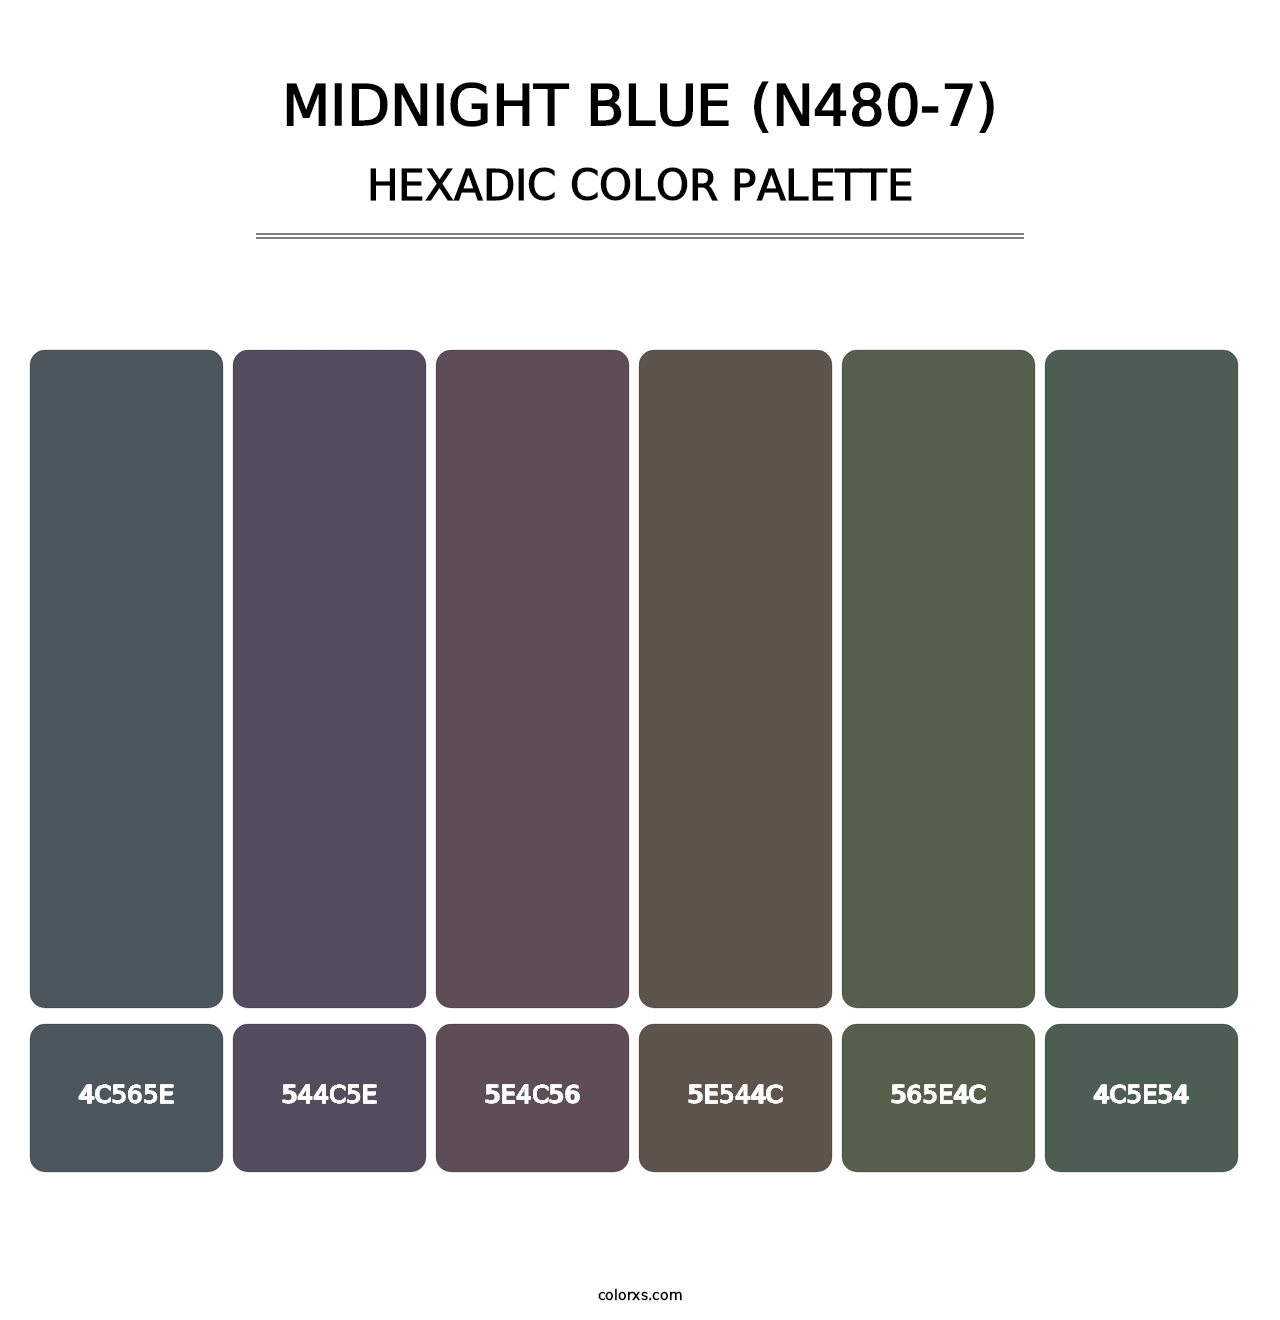 Midnight Blue (N480-7) - Hexadic Color Palette